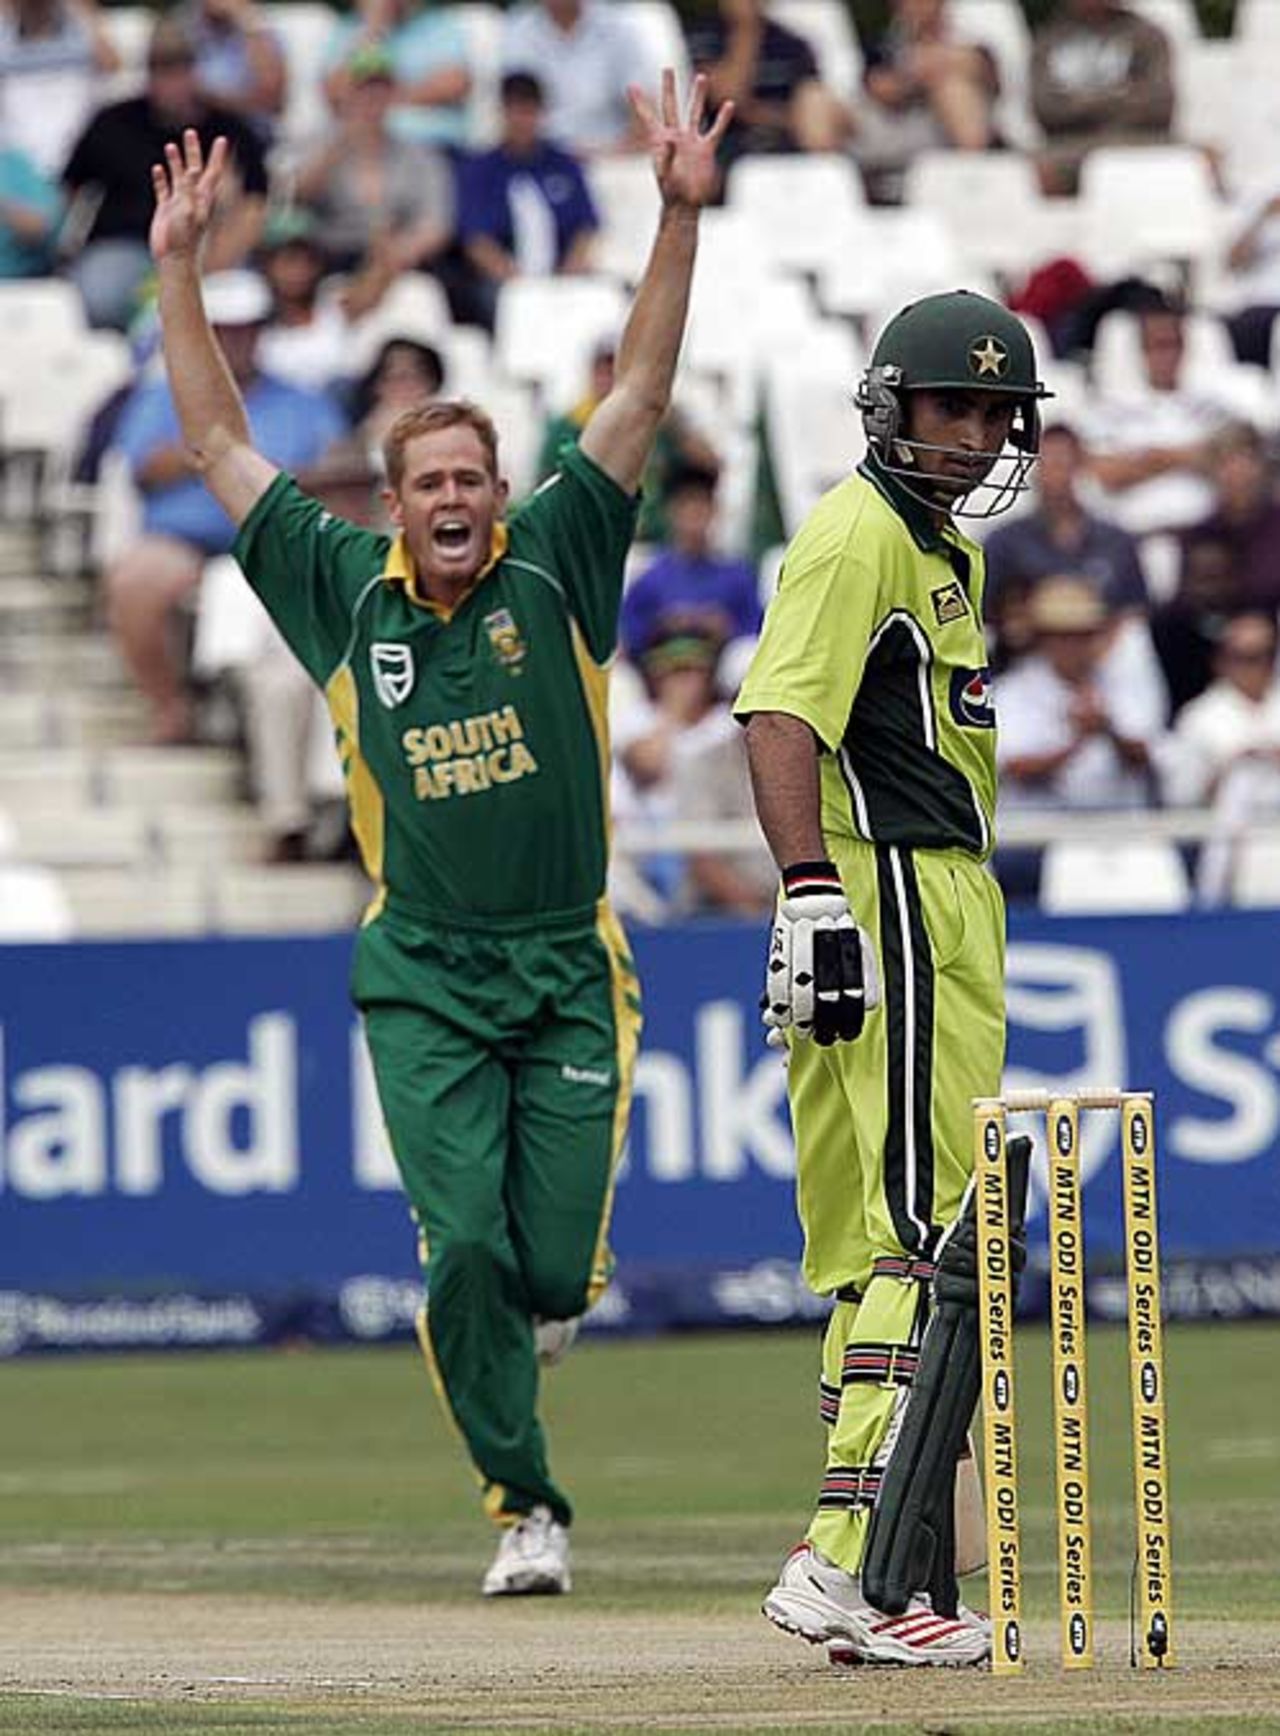 Shaun Pollock shifts Imran Nazir second ball, South Africa v Pakistan, 4th ODI, Cape Town, February 11, 2007